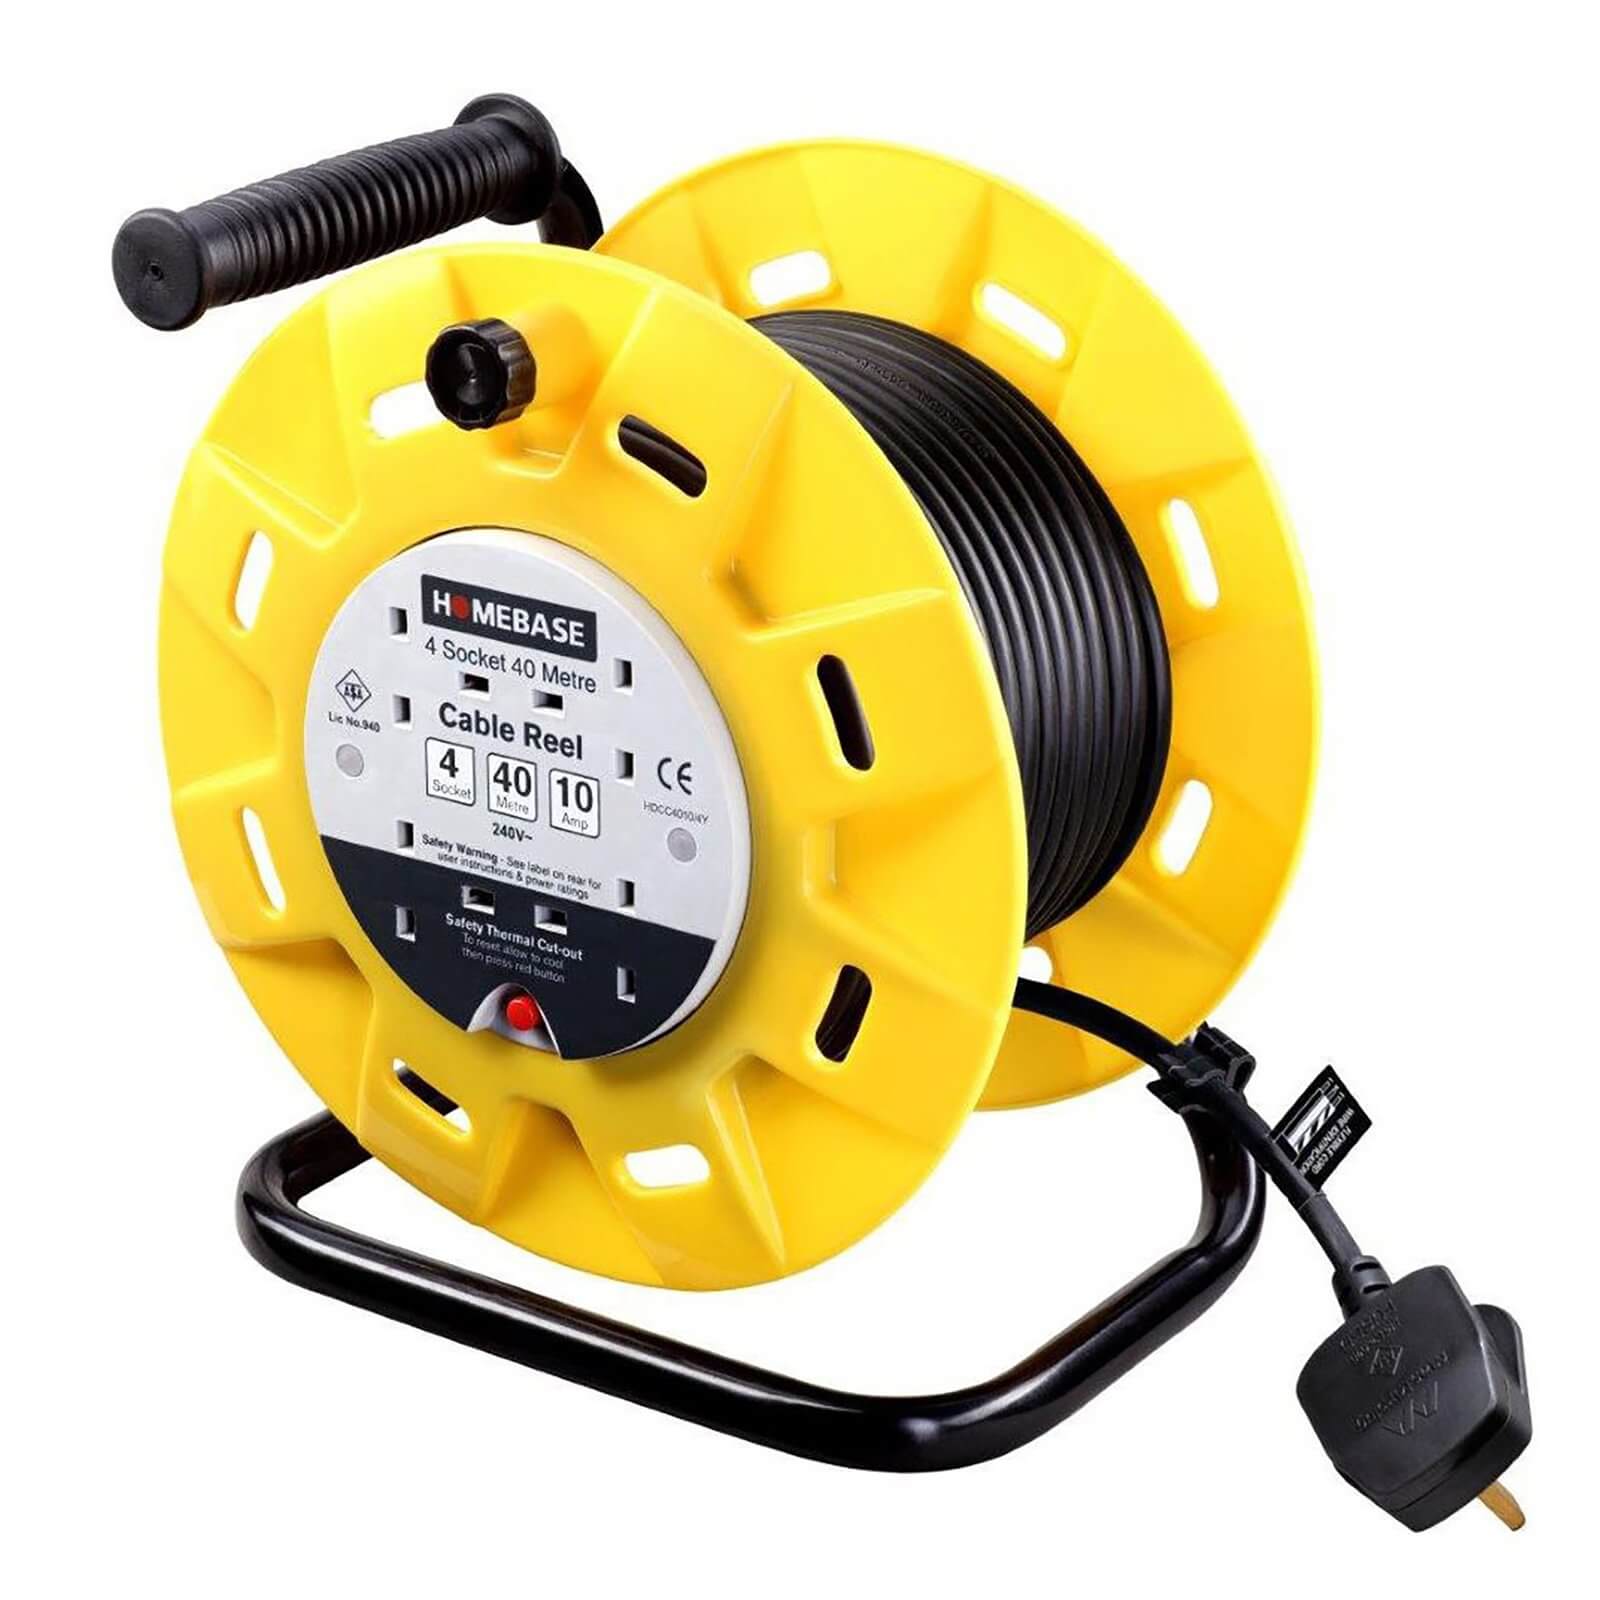 Masterplug 4 Socket Cable Reel 40m Yellow/Black